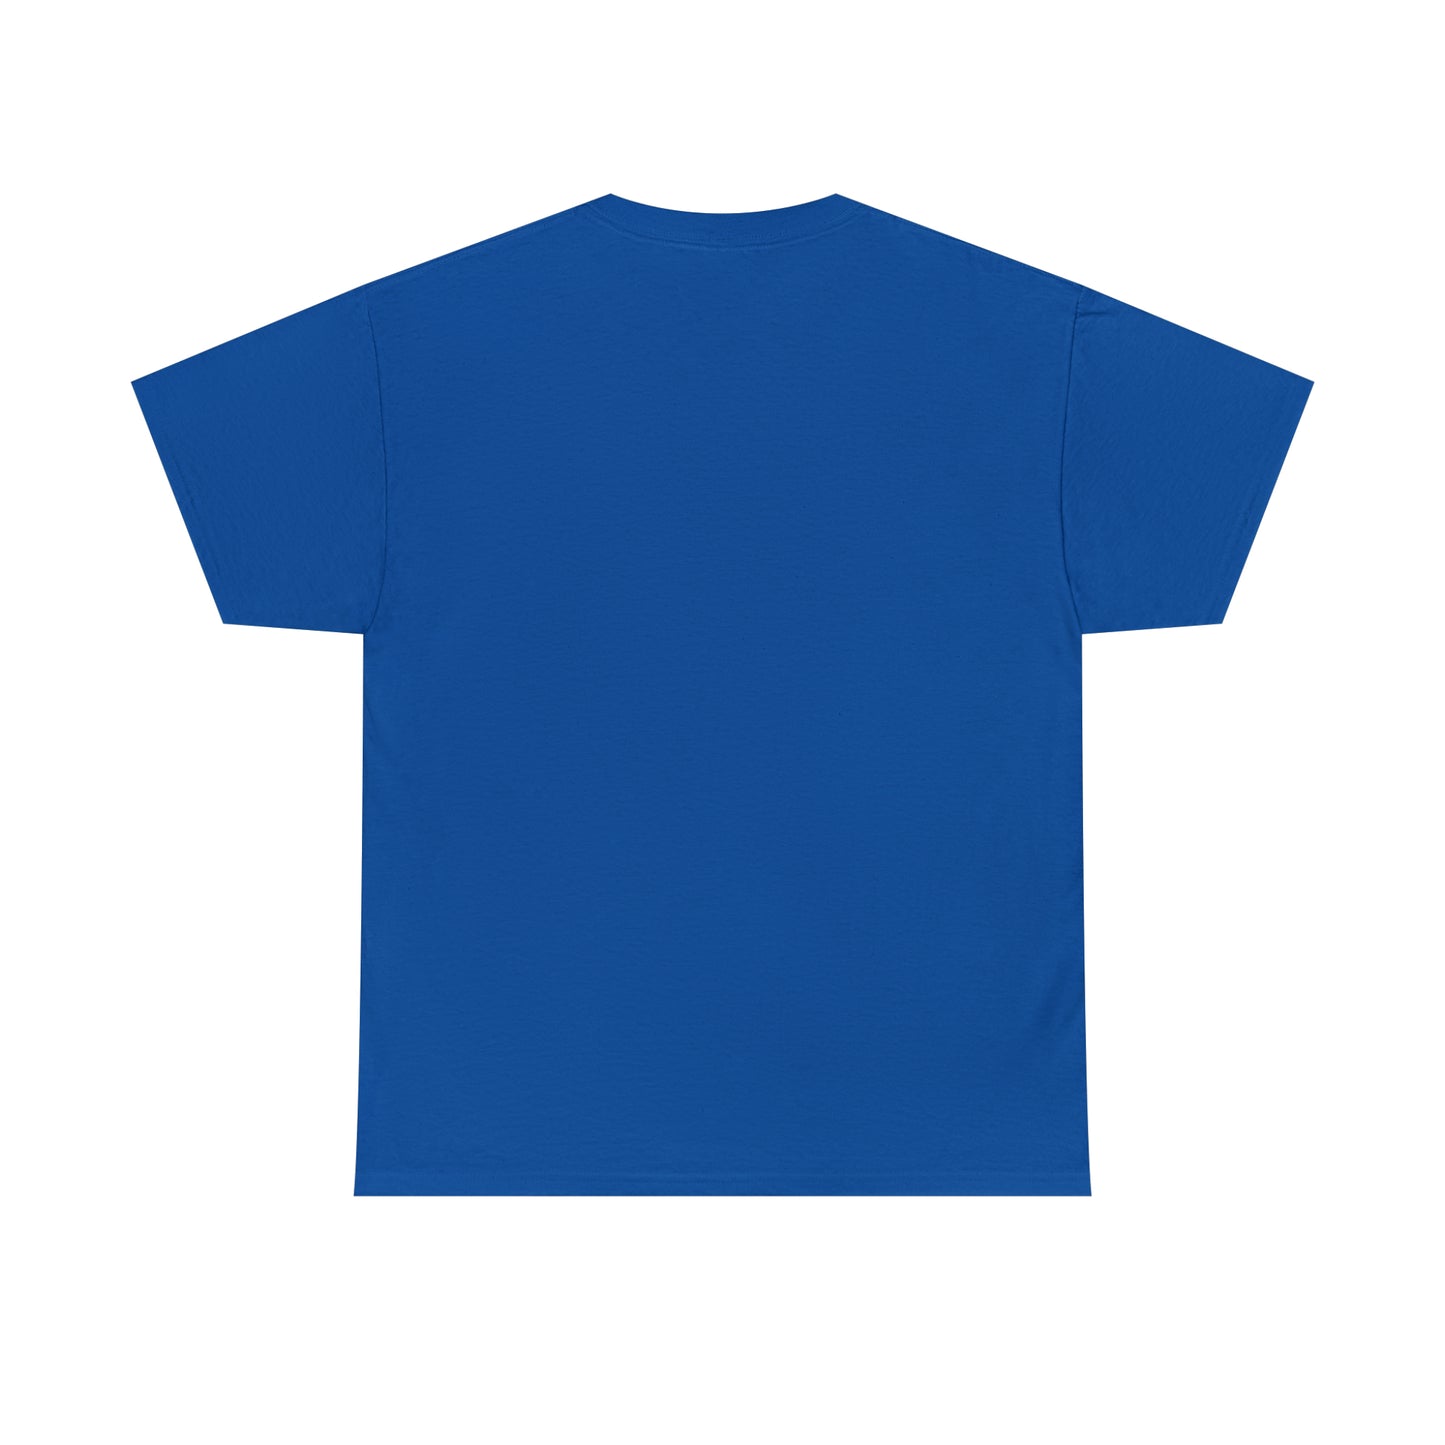 941’s Finest T-shirt (Flag design)